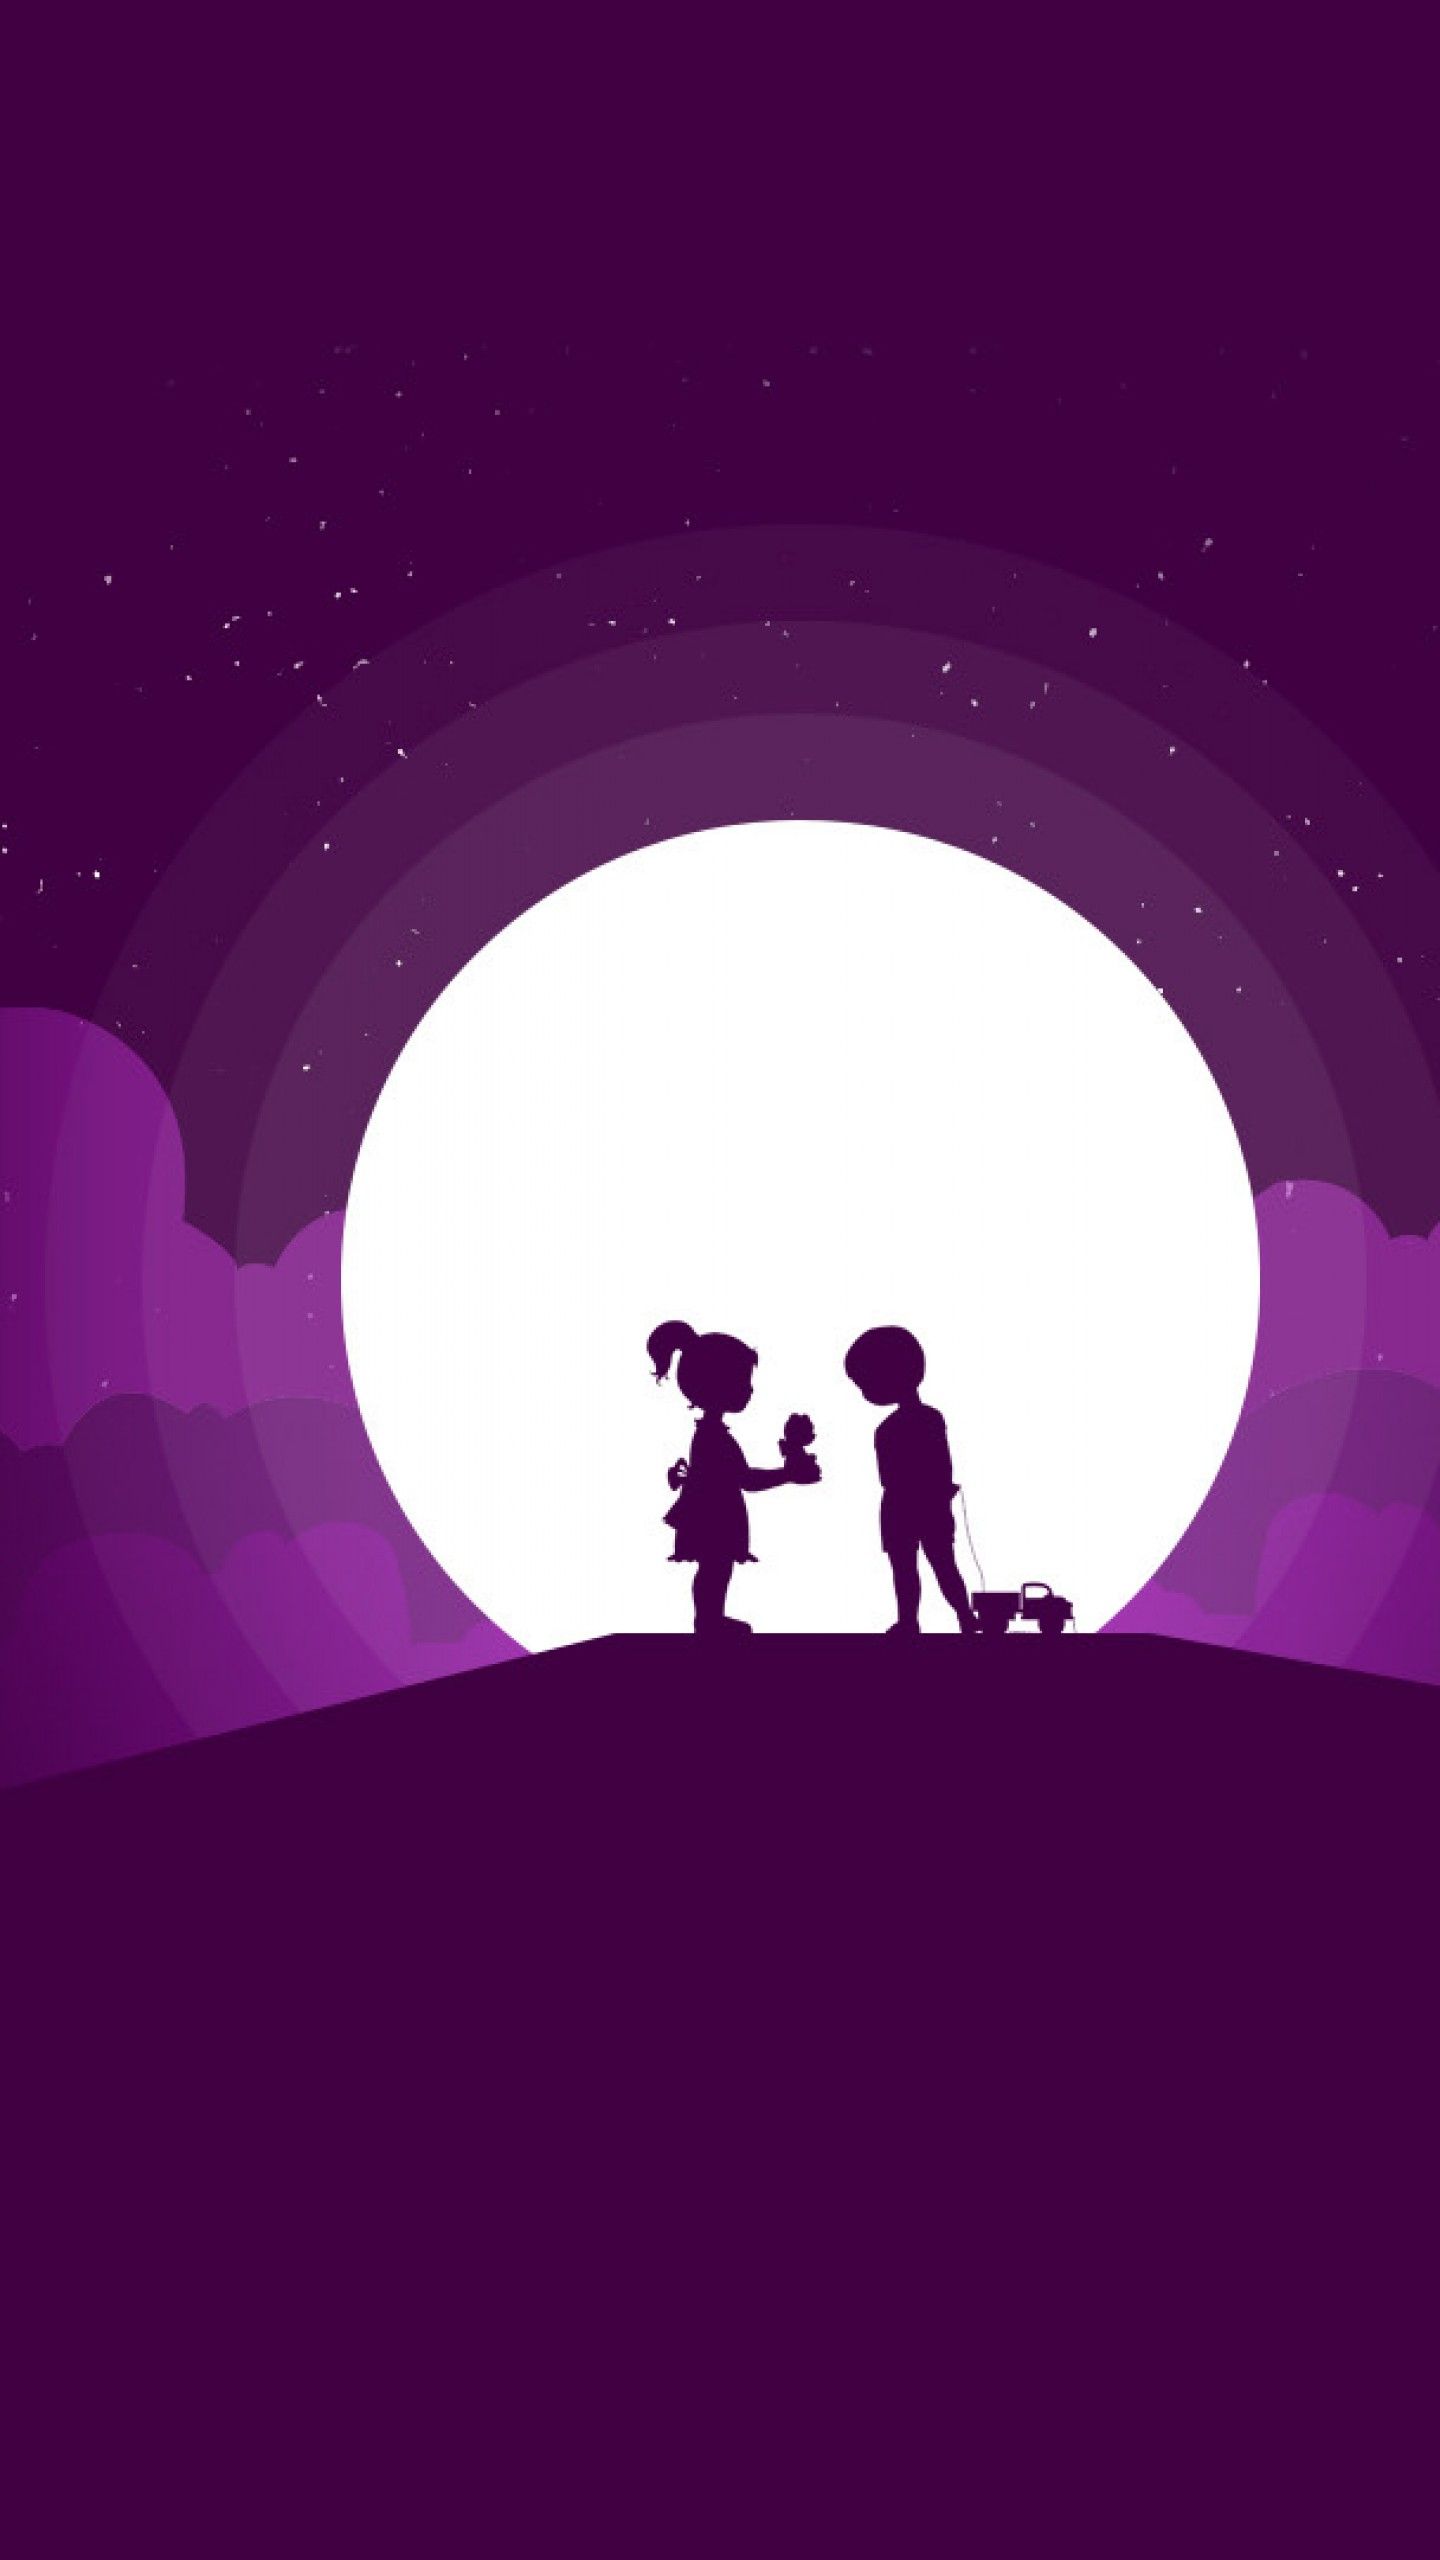 Wallpaper Boy, Girl, Moon, Silhouette, Playing kids, HD, Minimal